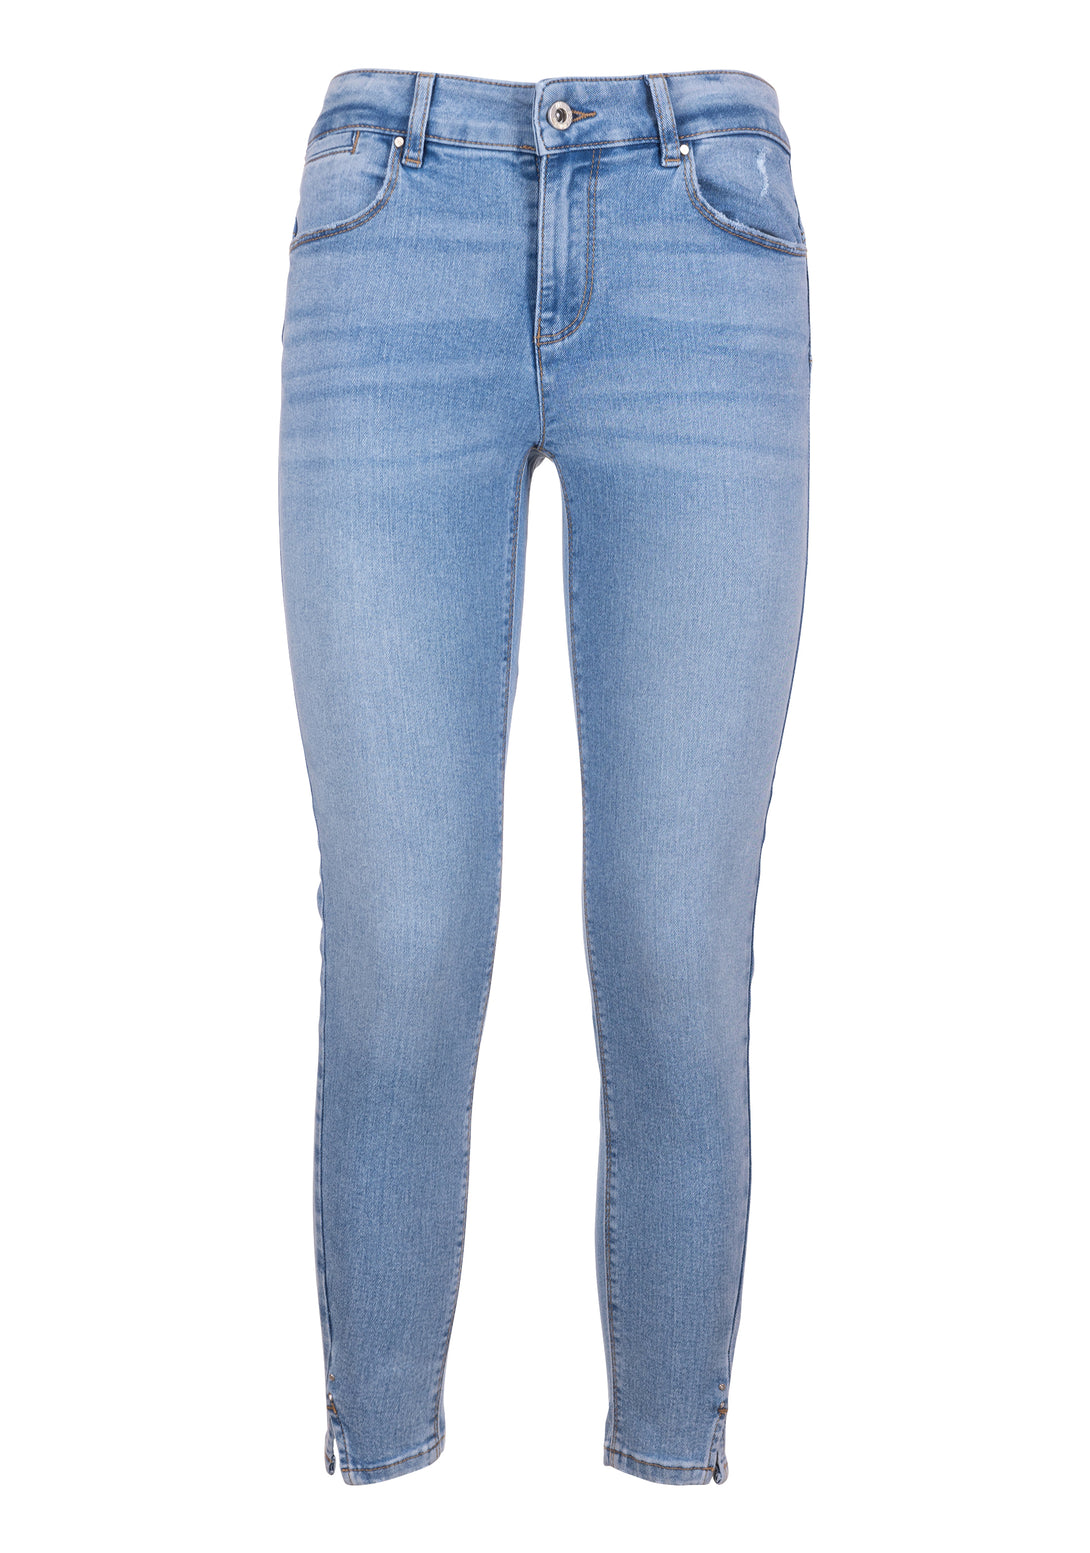 Jeans slim fit made in denim with light wash Fracomina FP23SV9002D40703-062-1